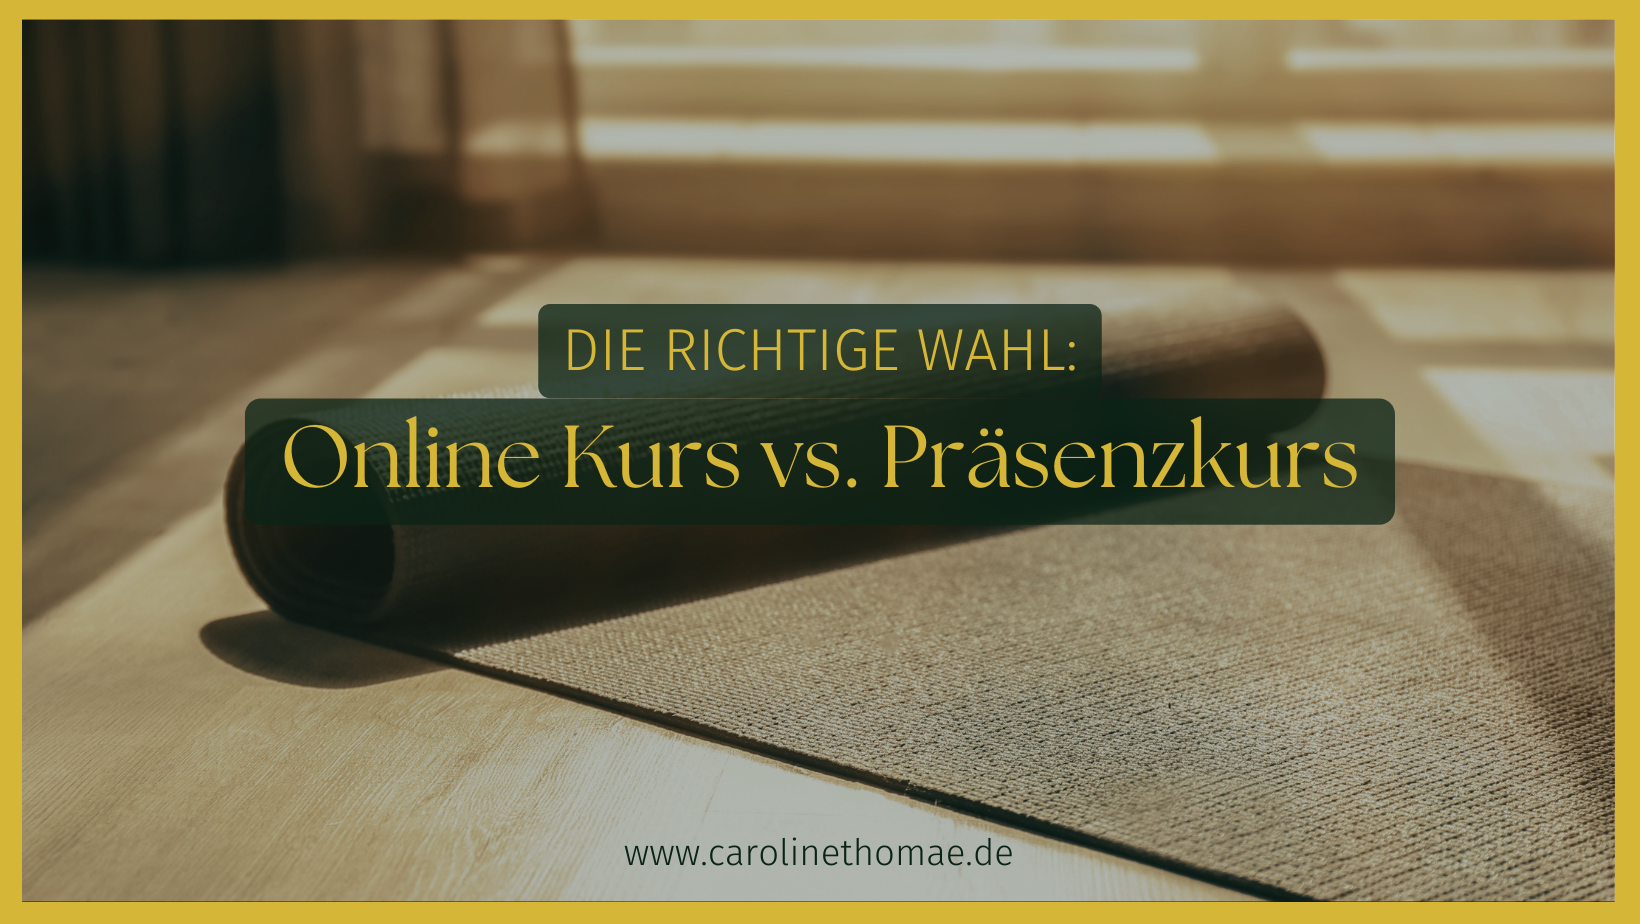 You are currently viewing Die richtige Wahl: Online Kurse vs. Präsenzkurse